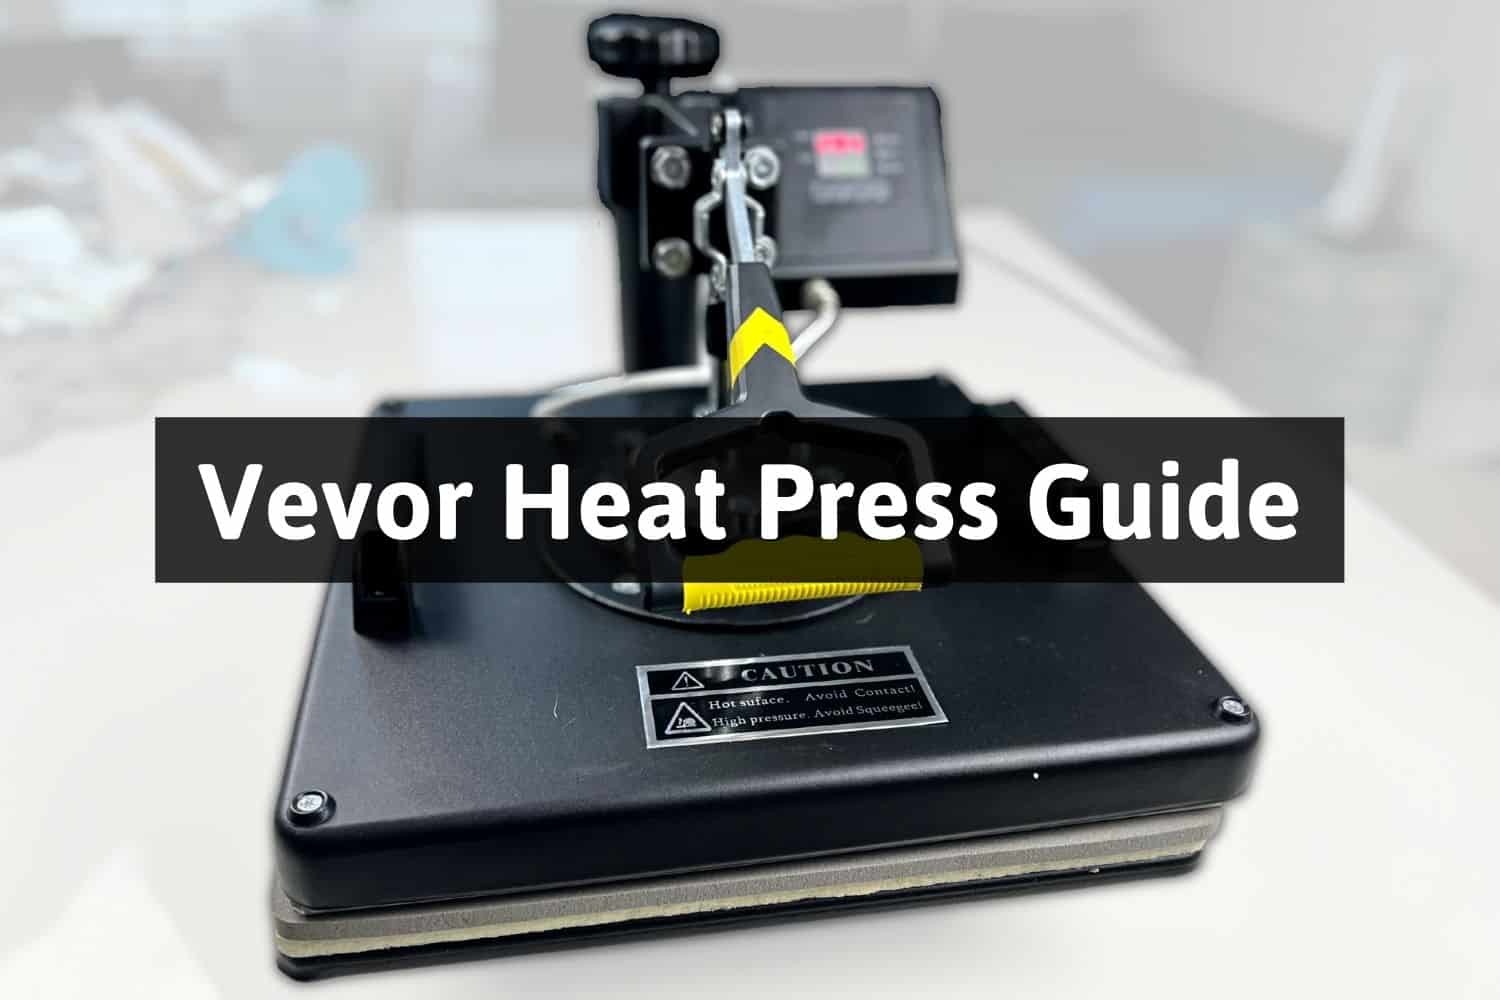 HTVRONT Heat Press Machine for T Shirts, 10X10 Portable Tshirt Press  Machine, Fast Heat-up Iron Press Heat Transfer Machine for Hat